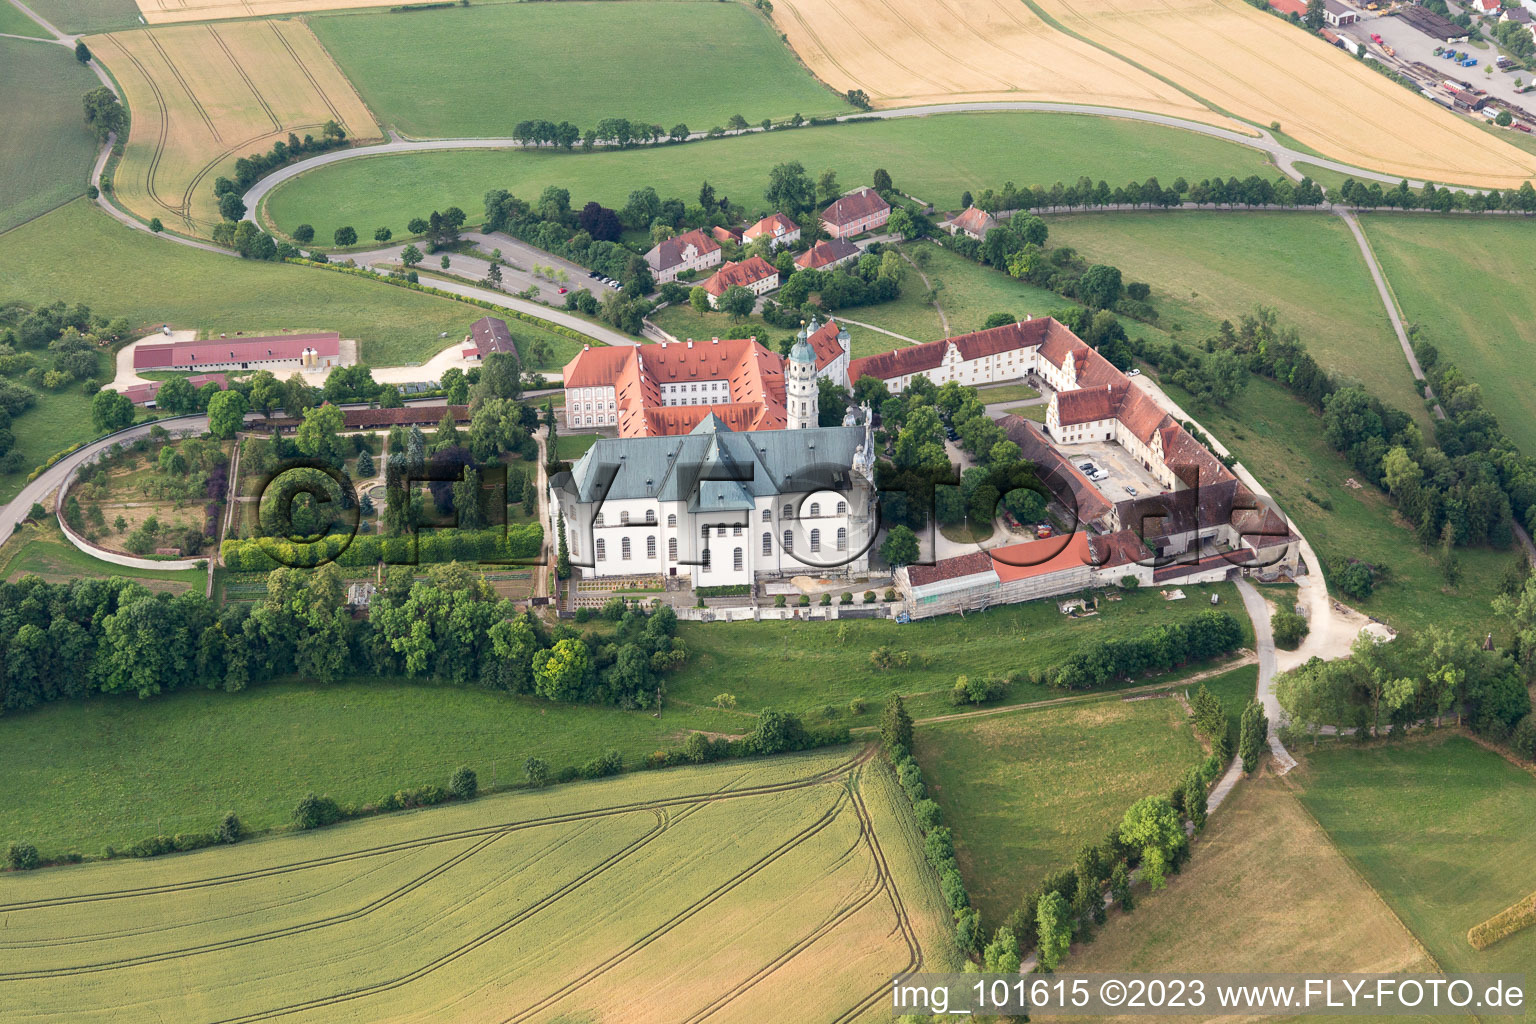 Monastery in Neresheim in the state Baden-Wuerttemberg, Germany